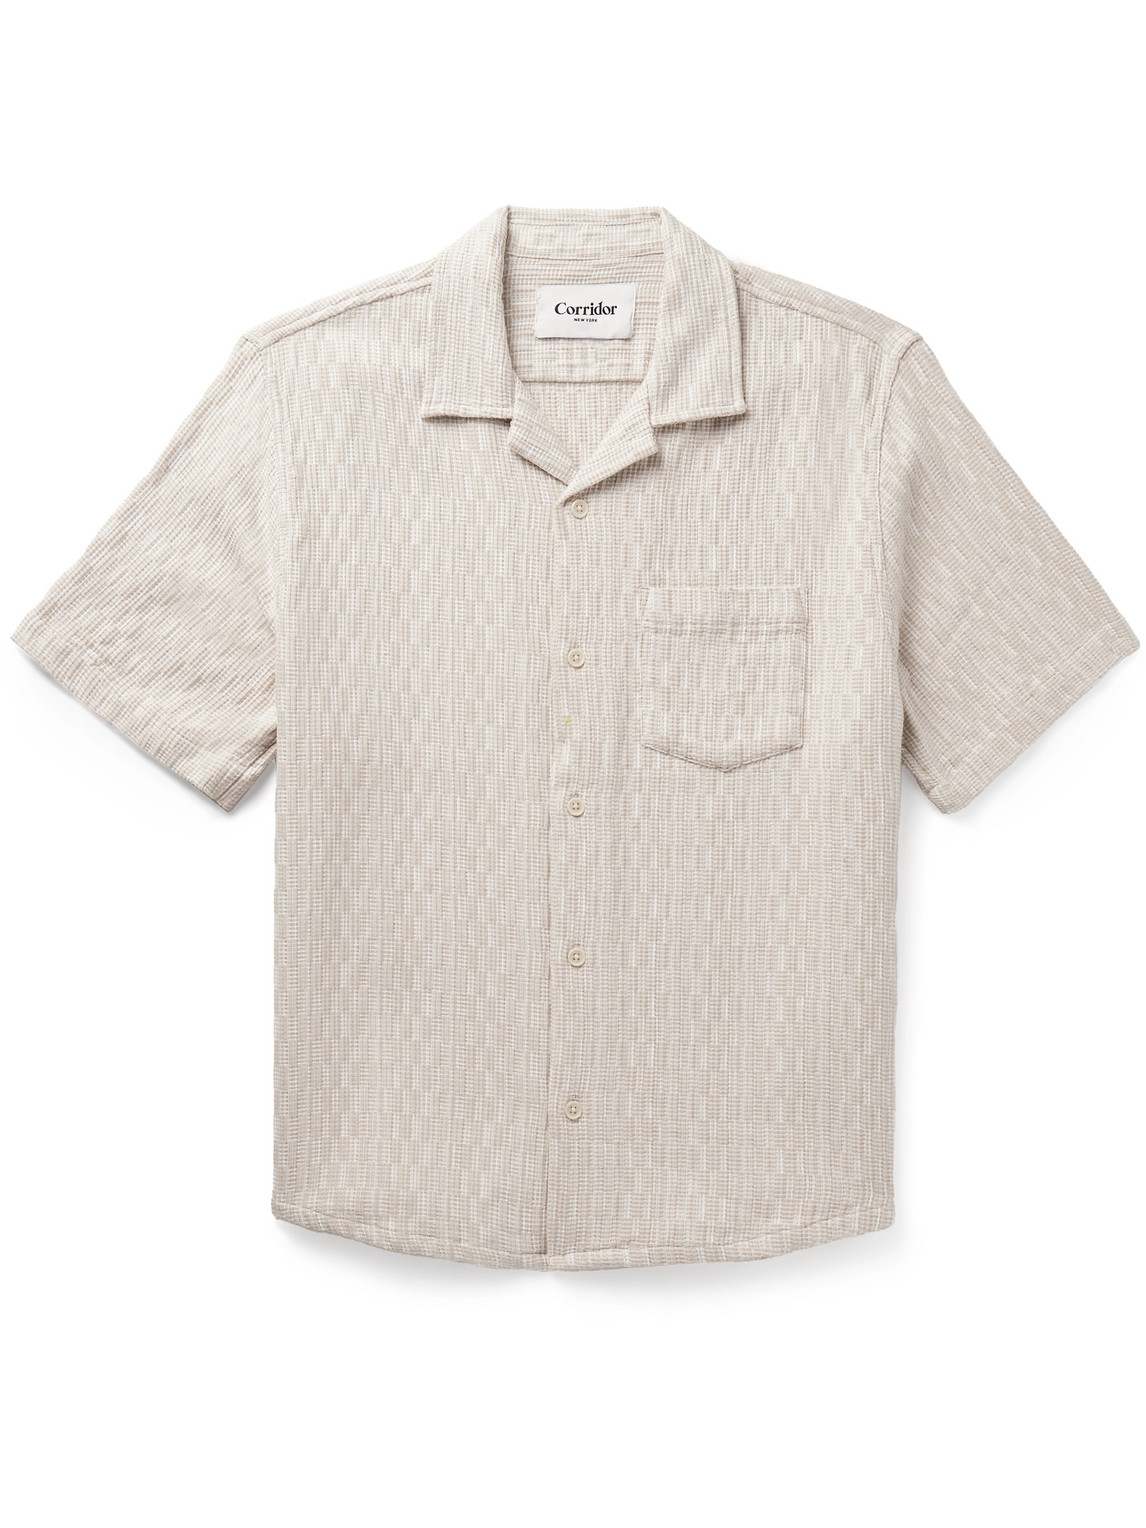 Corridor - Camp-Collar Cotton-Jacquard Shirt - Men - White - M von Corridor